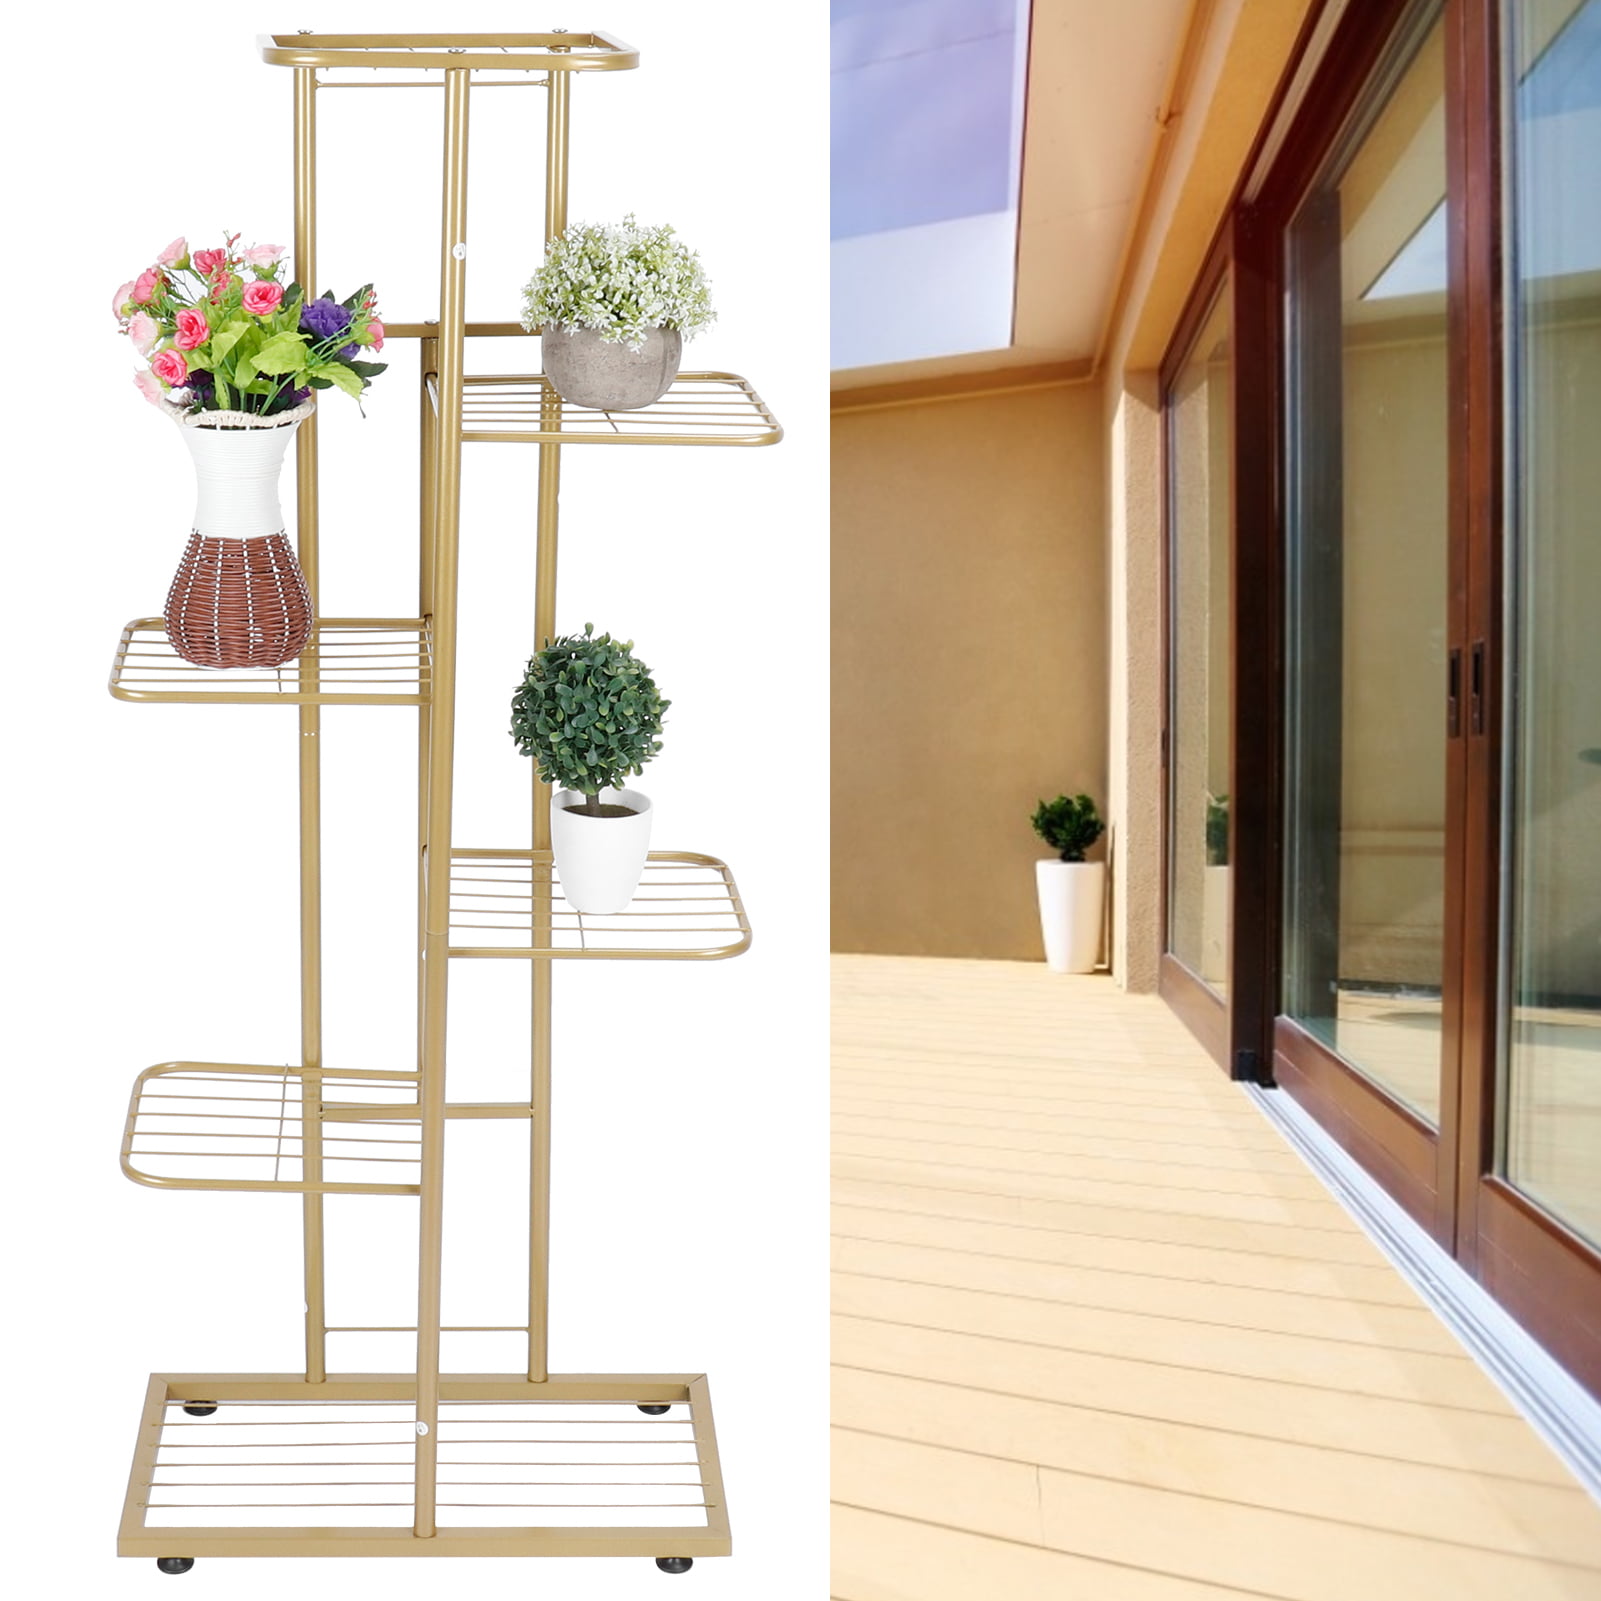 Metal Stand Plant Flower Storage Shelf Rack Balcony Porch Home Garden Decor New 